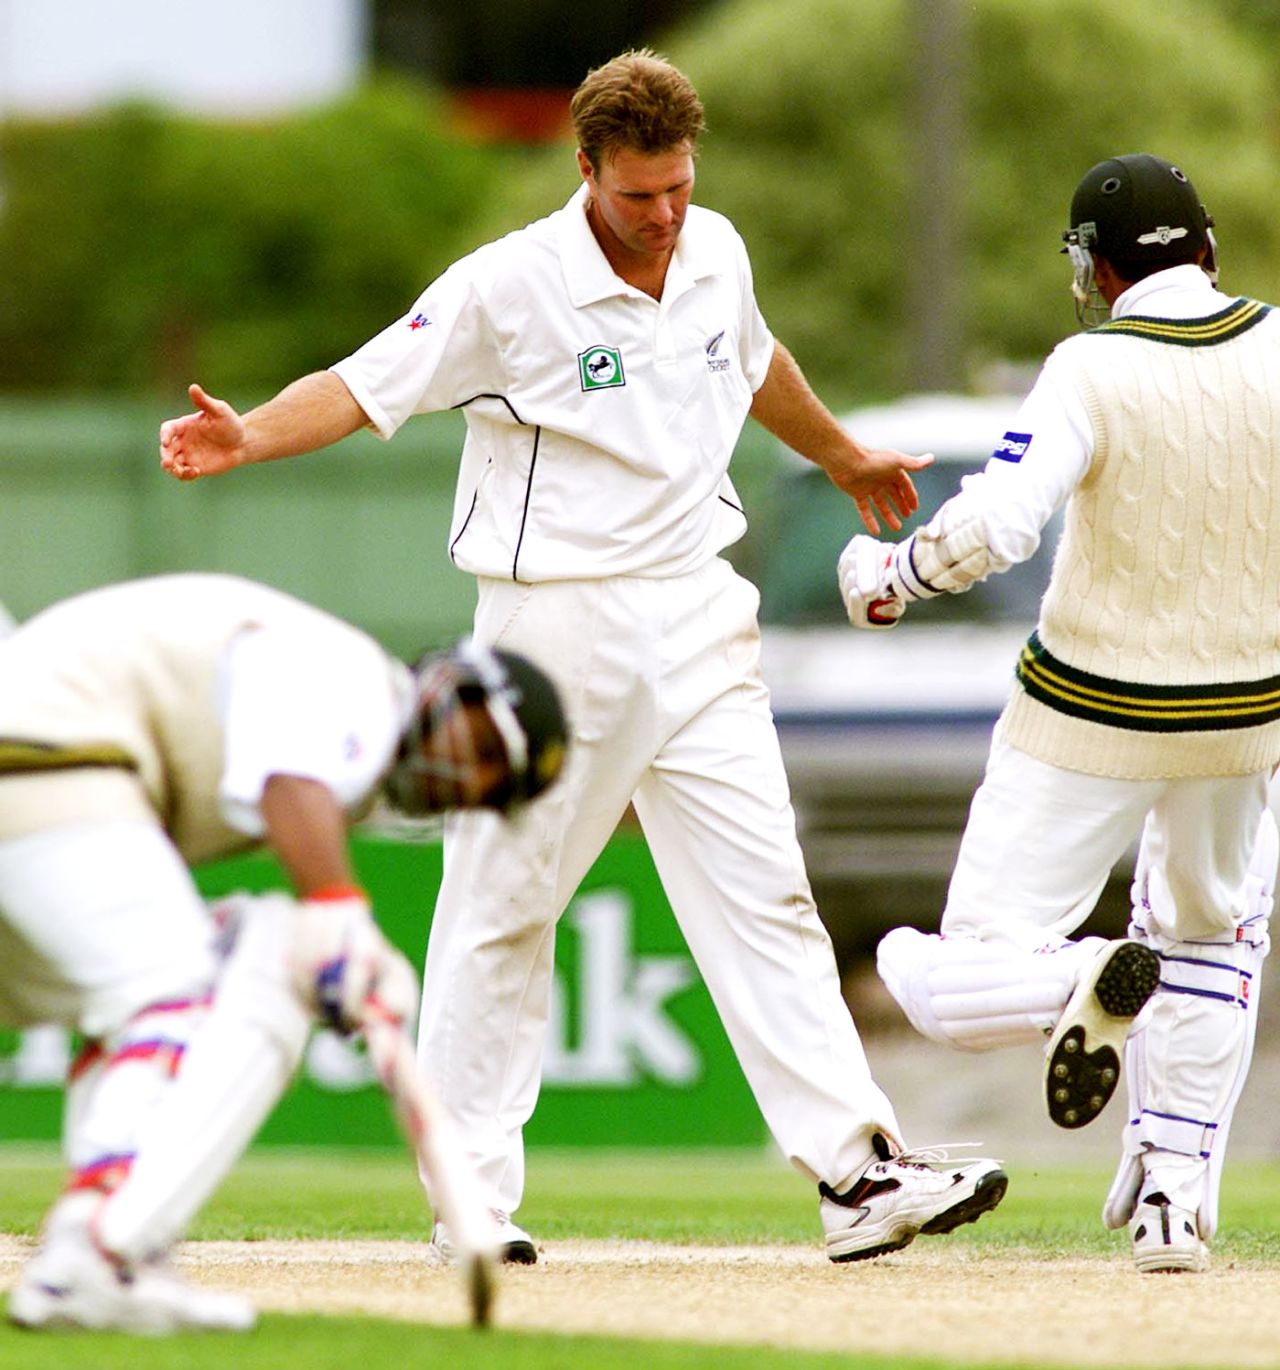 Grant Bradburn kicks the turf in frustration as Yousuf Youhana and Saqlain Mushtaq's partnership builds, New Zealand v Pakistan, 2nd Test, Christchurch, 3rd day, March 17, 2001